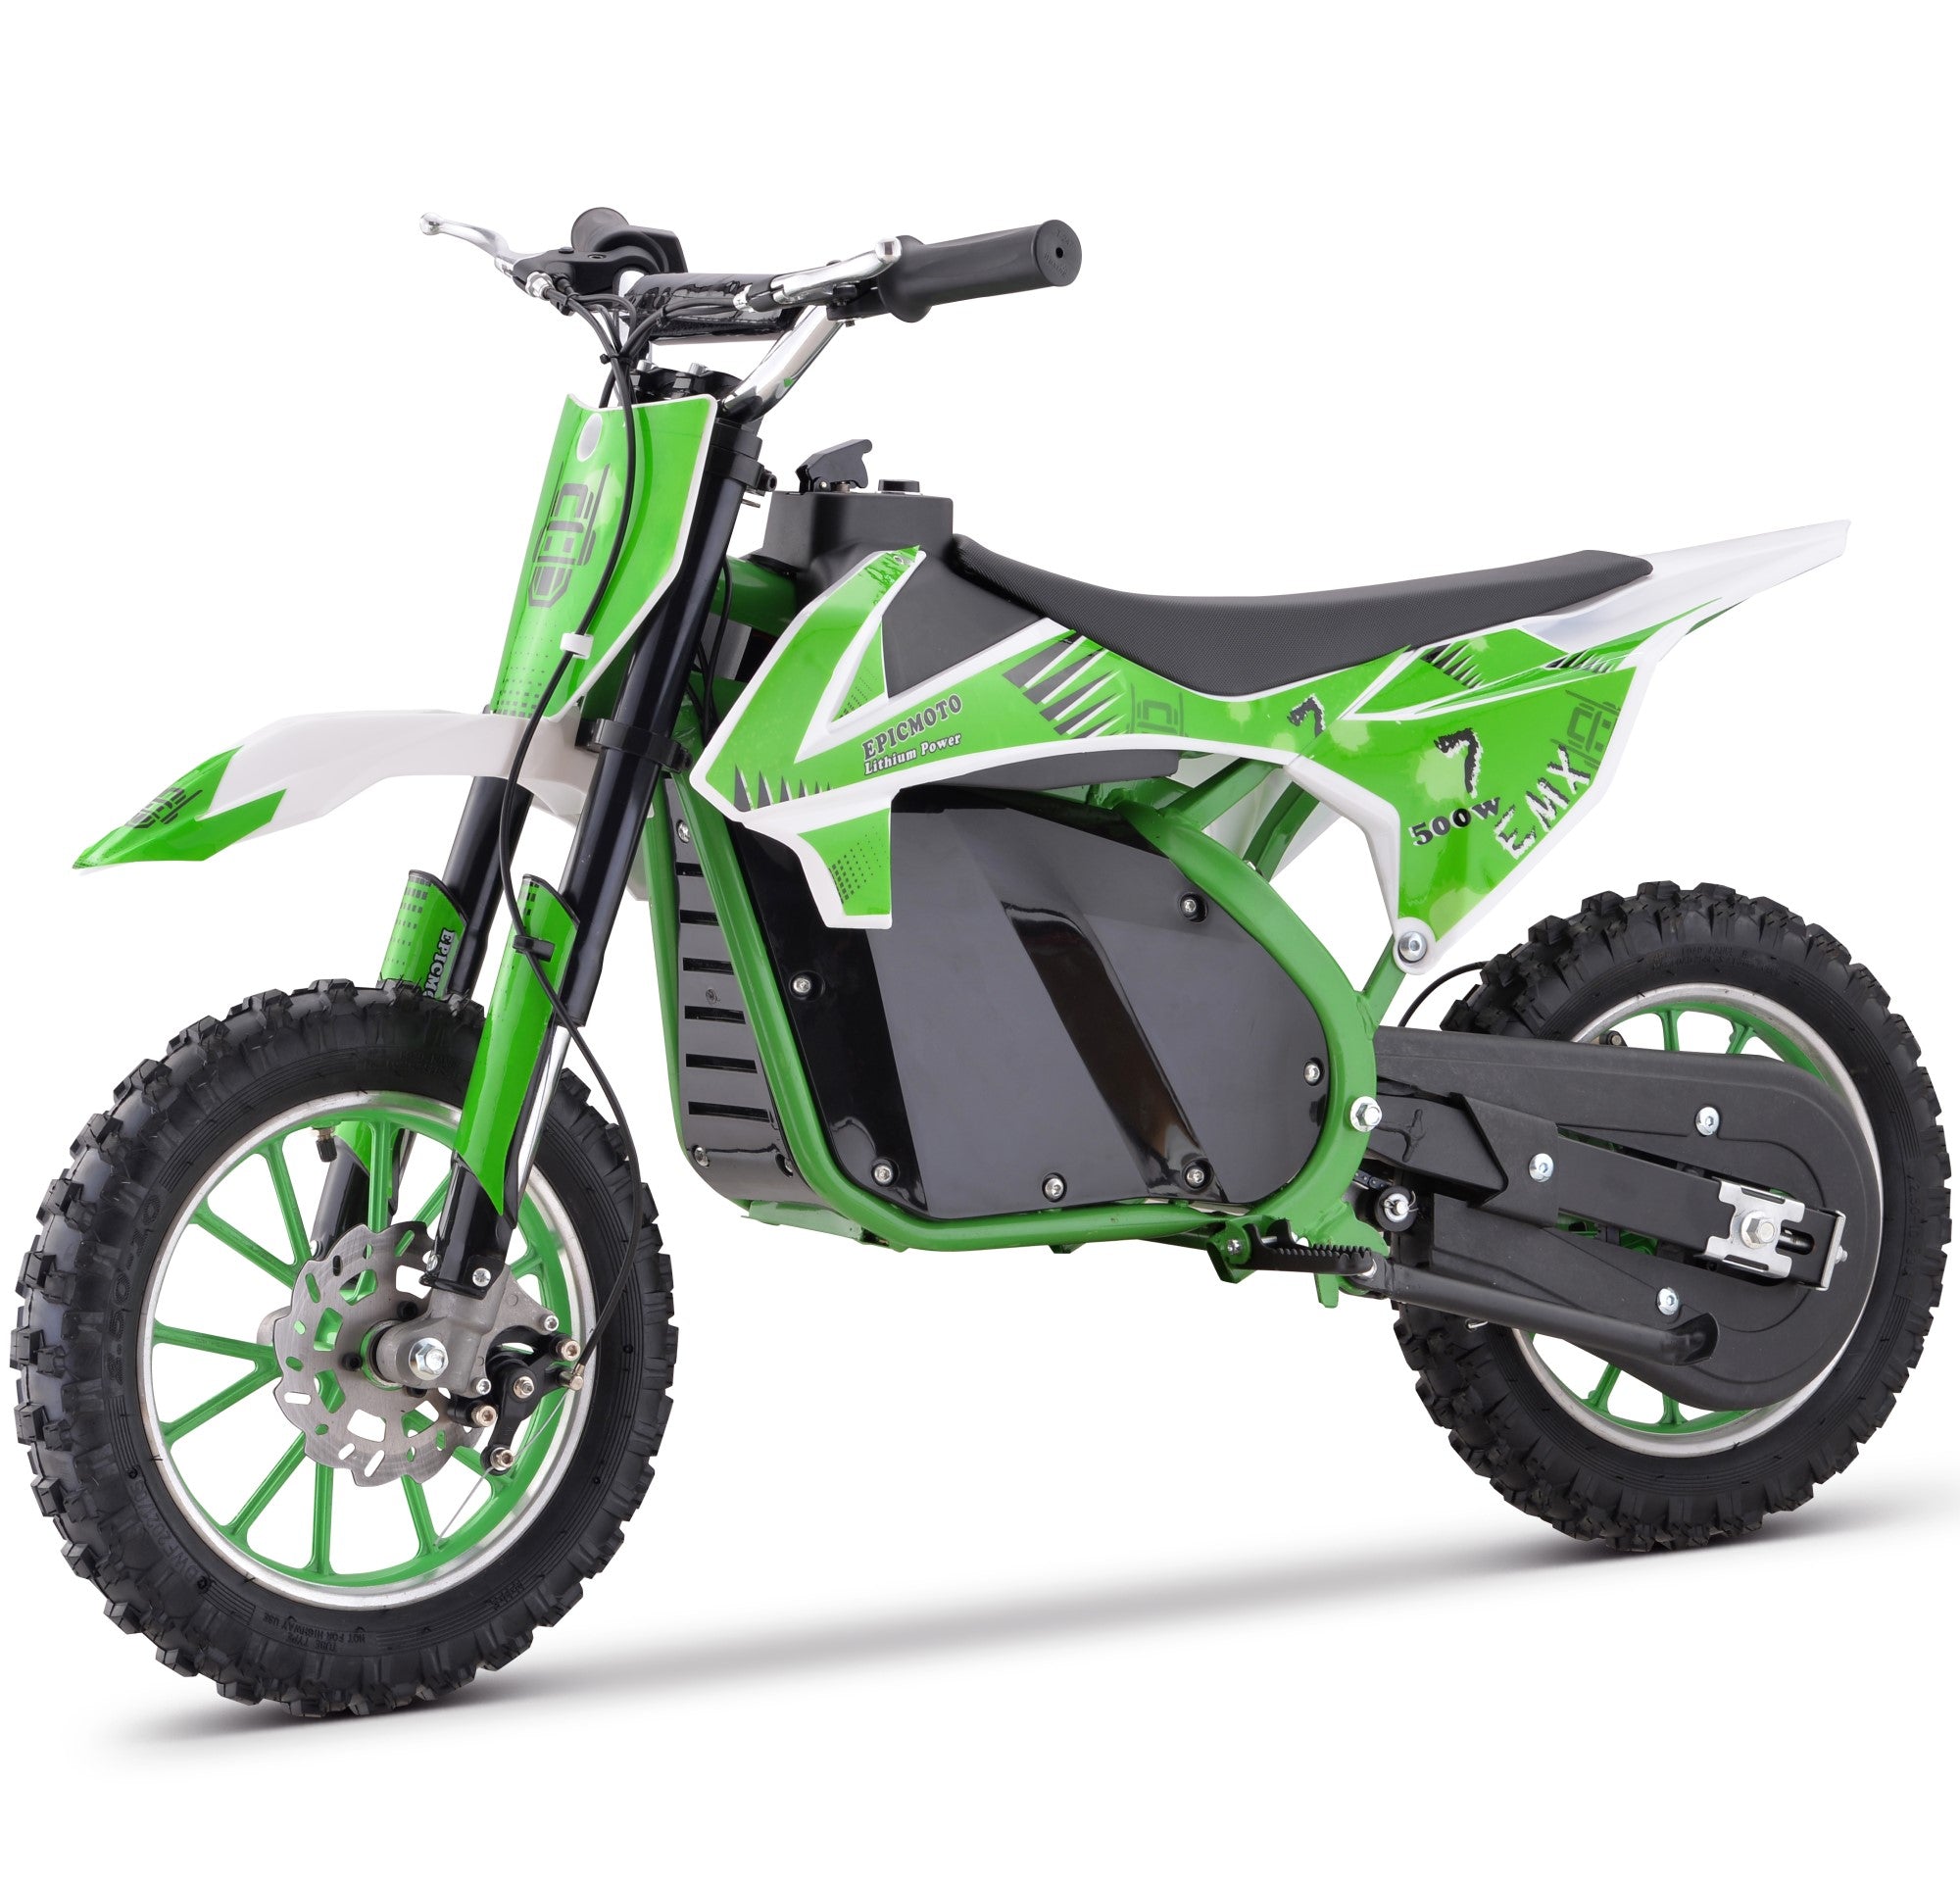 Epicmoto 500W EMX Lithium Powered Kids Electric Dirt Bike - Green